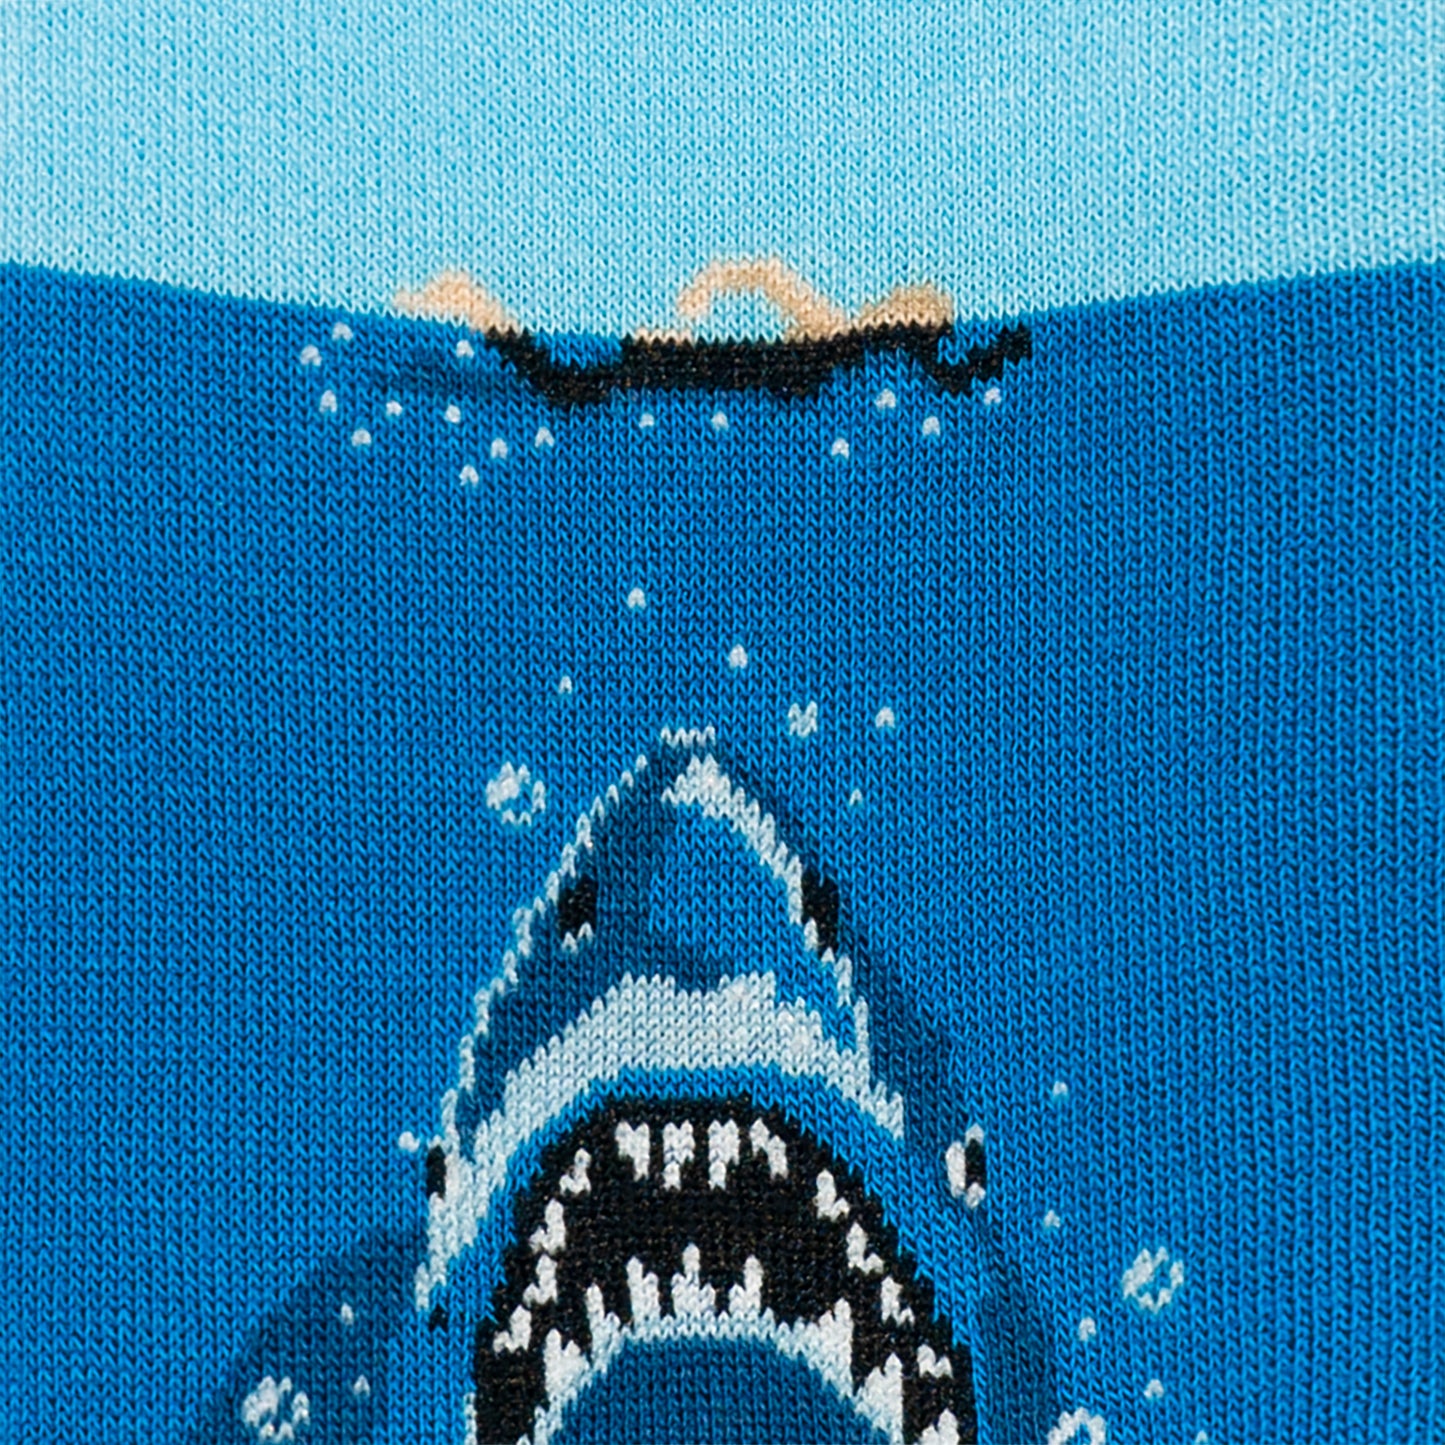 Jaws Shark Attack No Show - Blue (3)